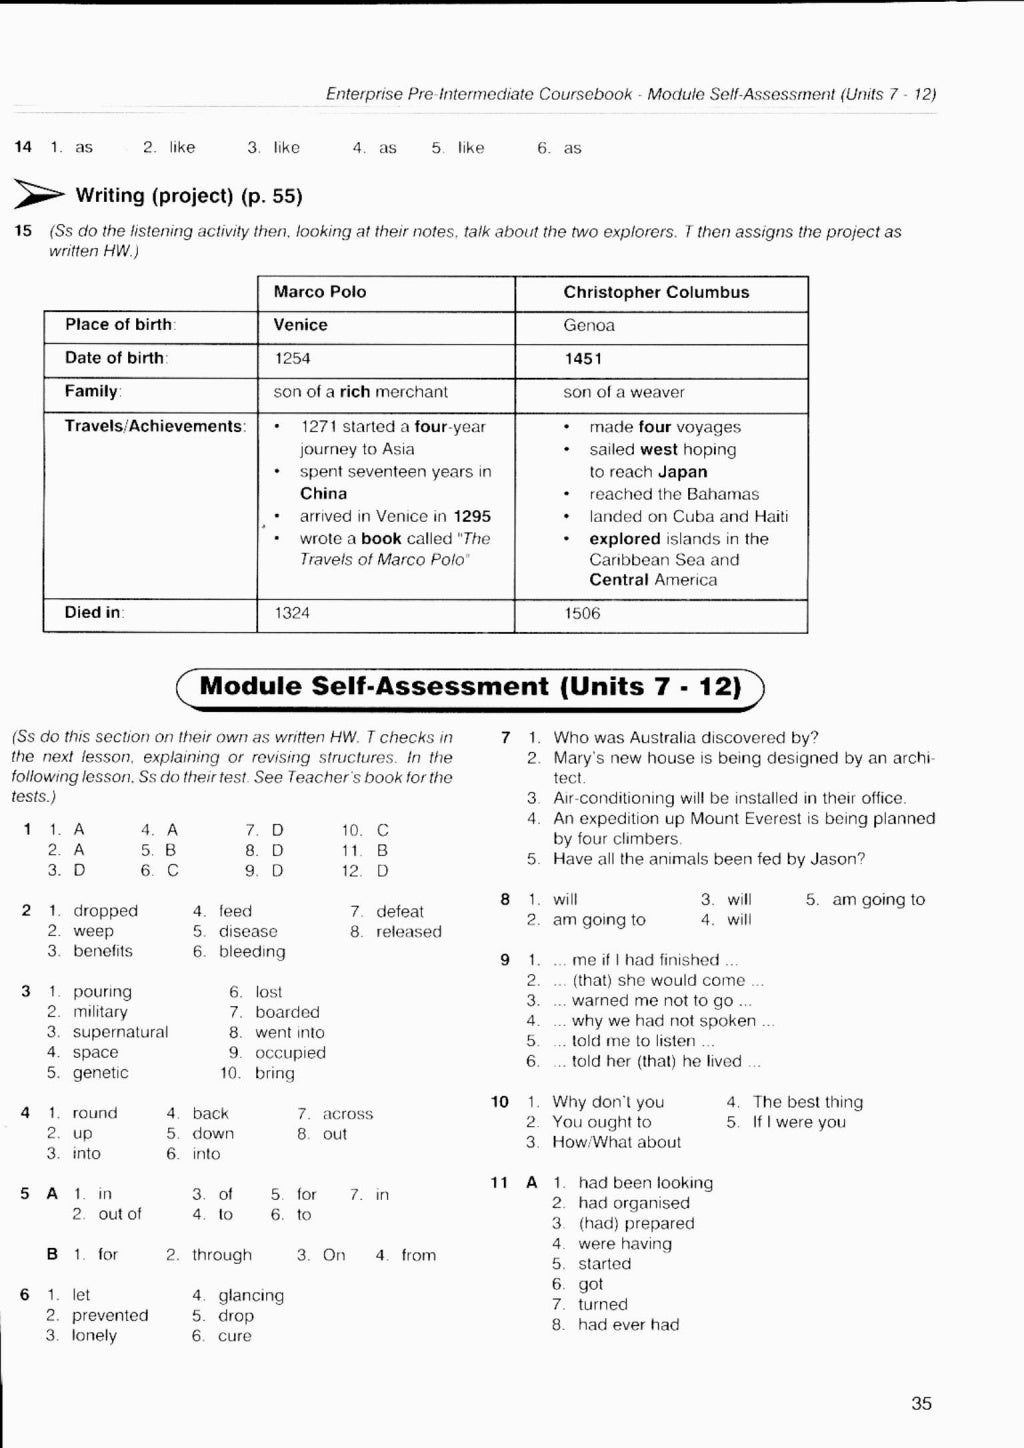 Enterprise 4 workbook. Гдз Enterprise 3 Workbook pre Intermediate. Module self Assessment 1 Units 1-4 ответы Enterprise 1. Module self-Assessment 2 Units 7-12 ответы. Module self Assessment 1 Units 1-4 ответы.